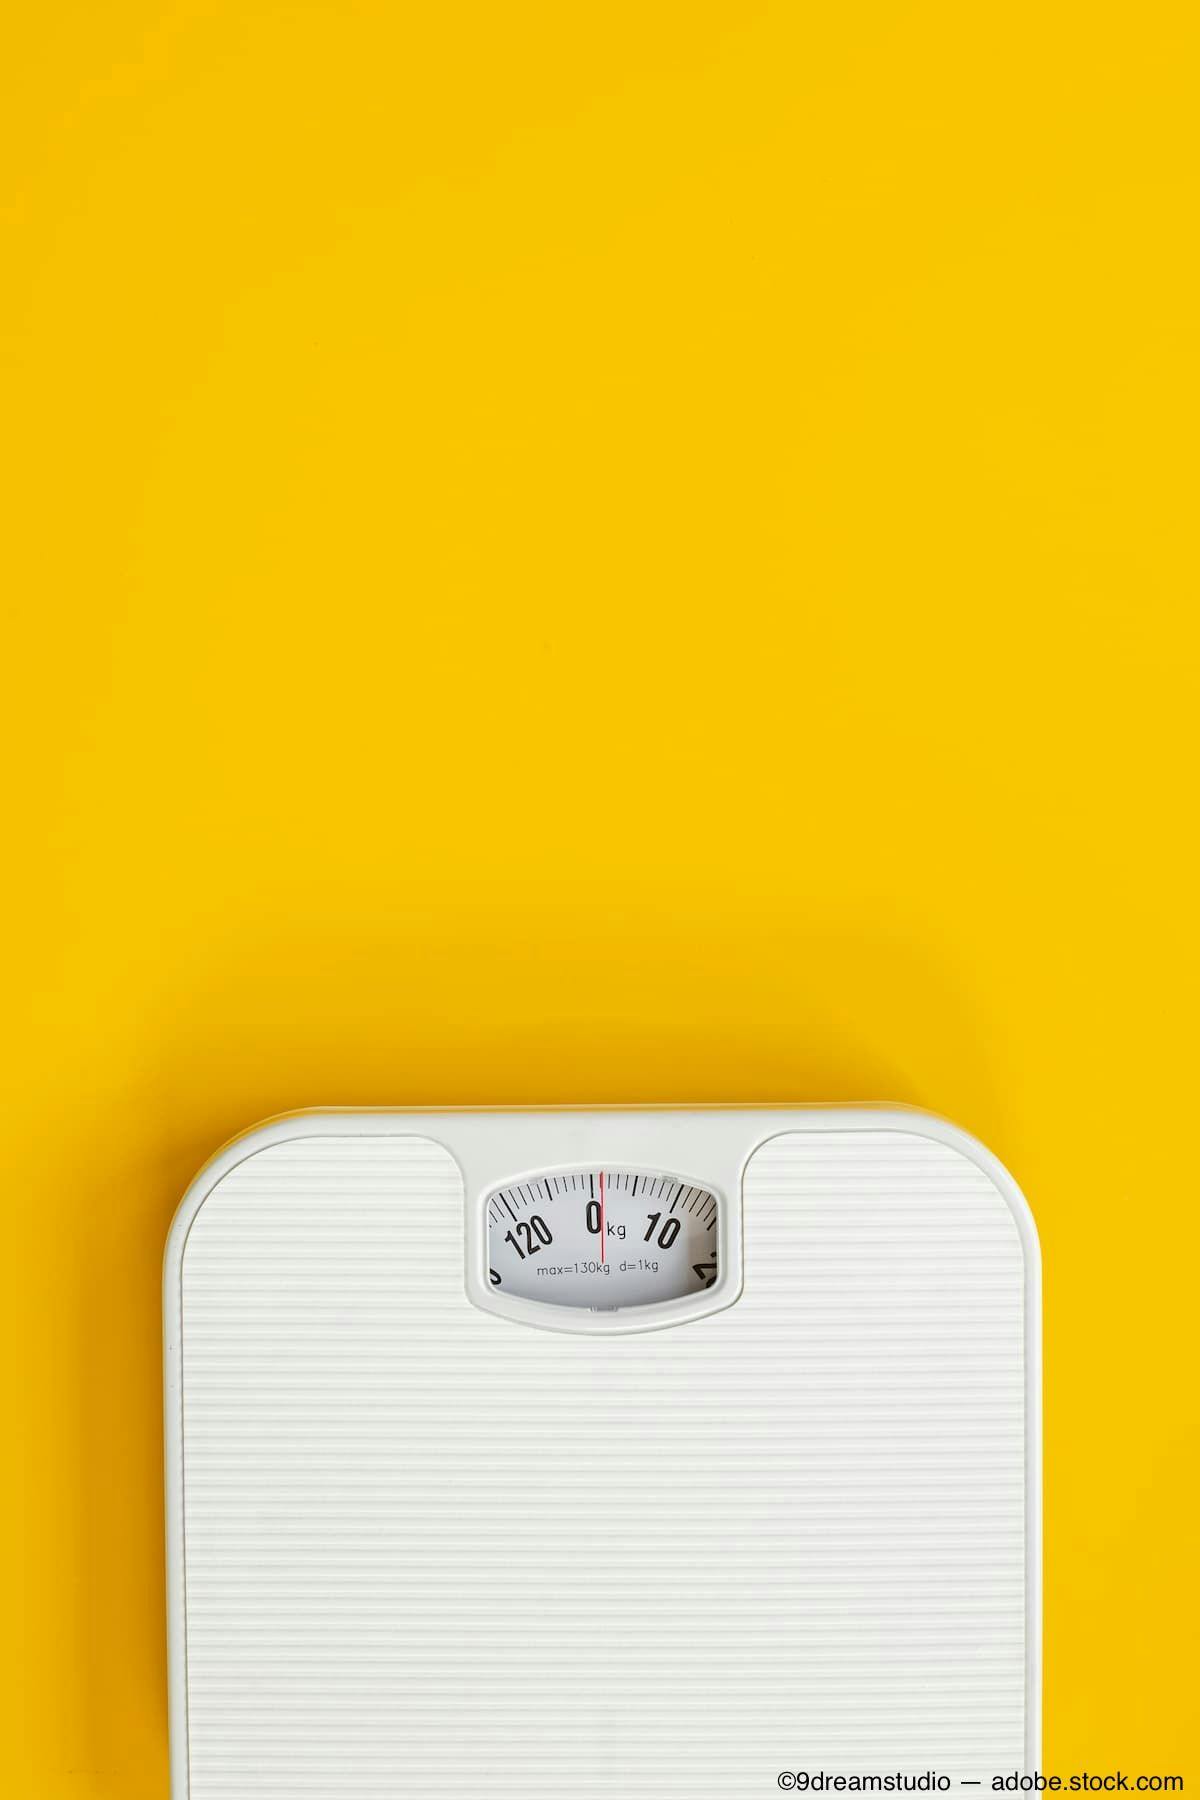 Weight scale on yellow backdrop Image Credit: AdobeStock/9dreamstudio